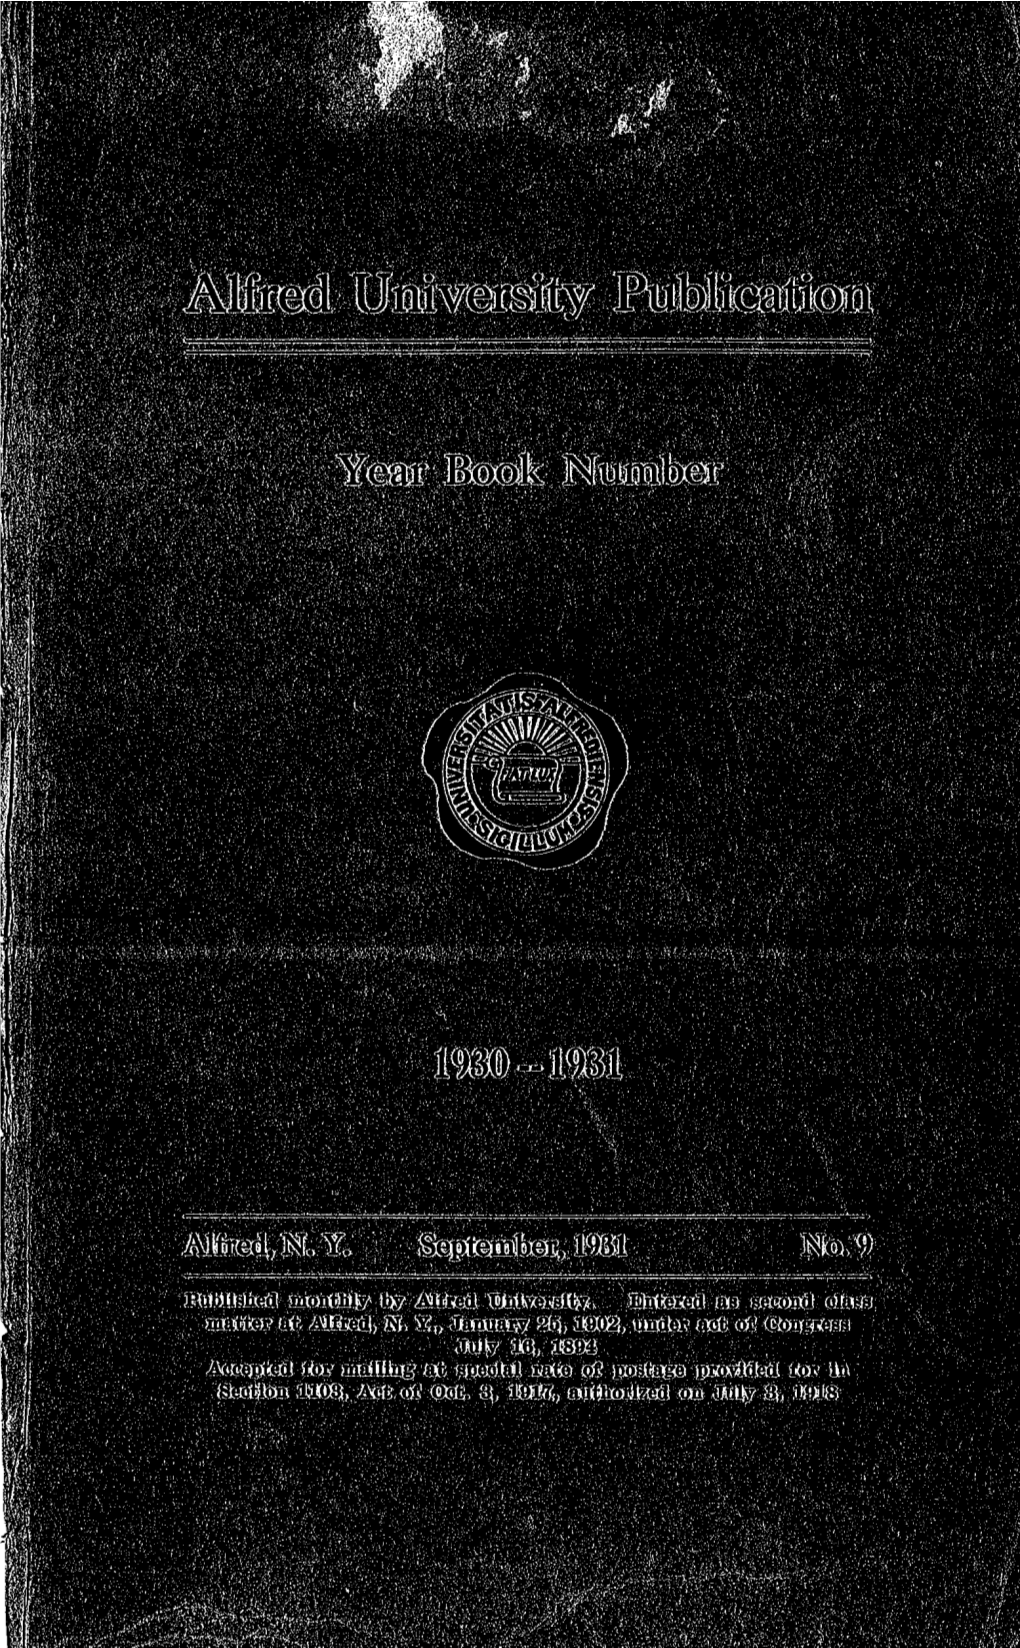 Alfred Annual Report 1930 1931.Pdf